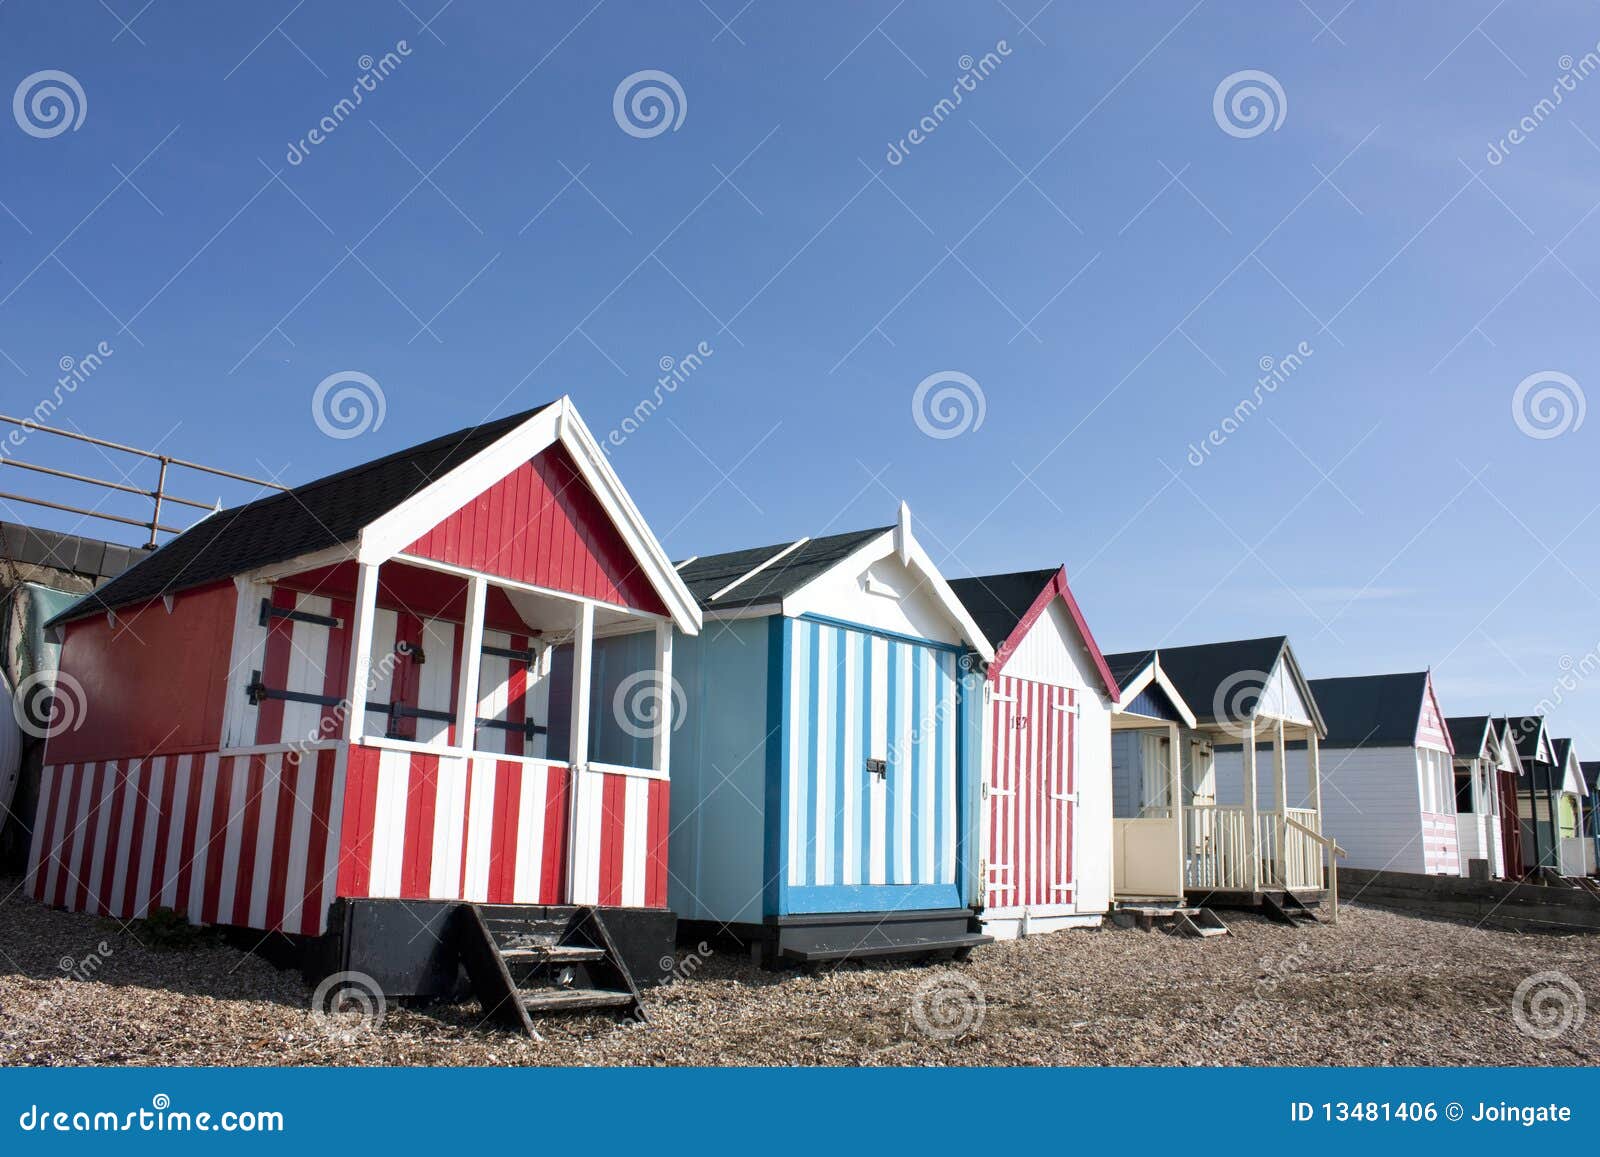 thorpe bay beach huts